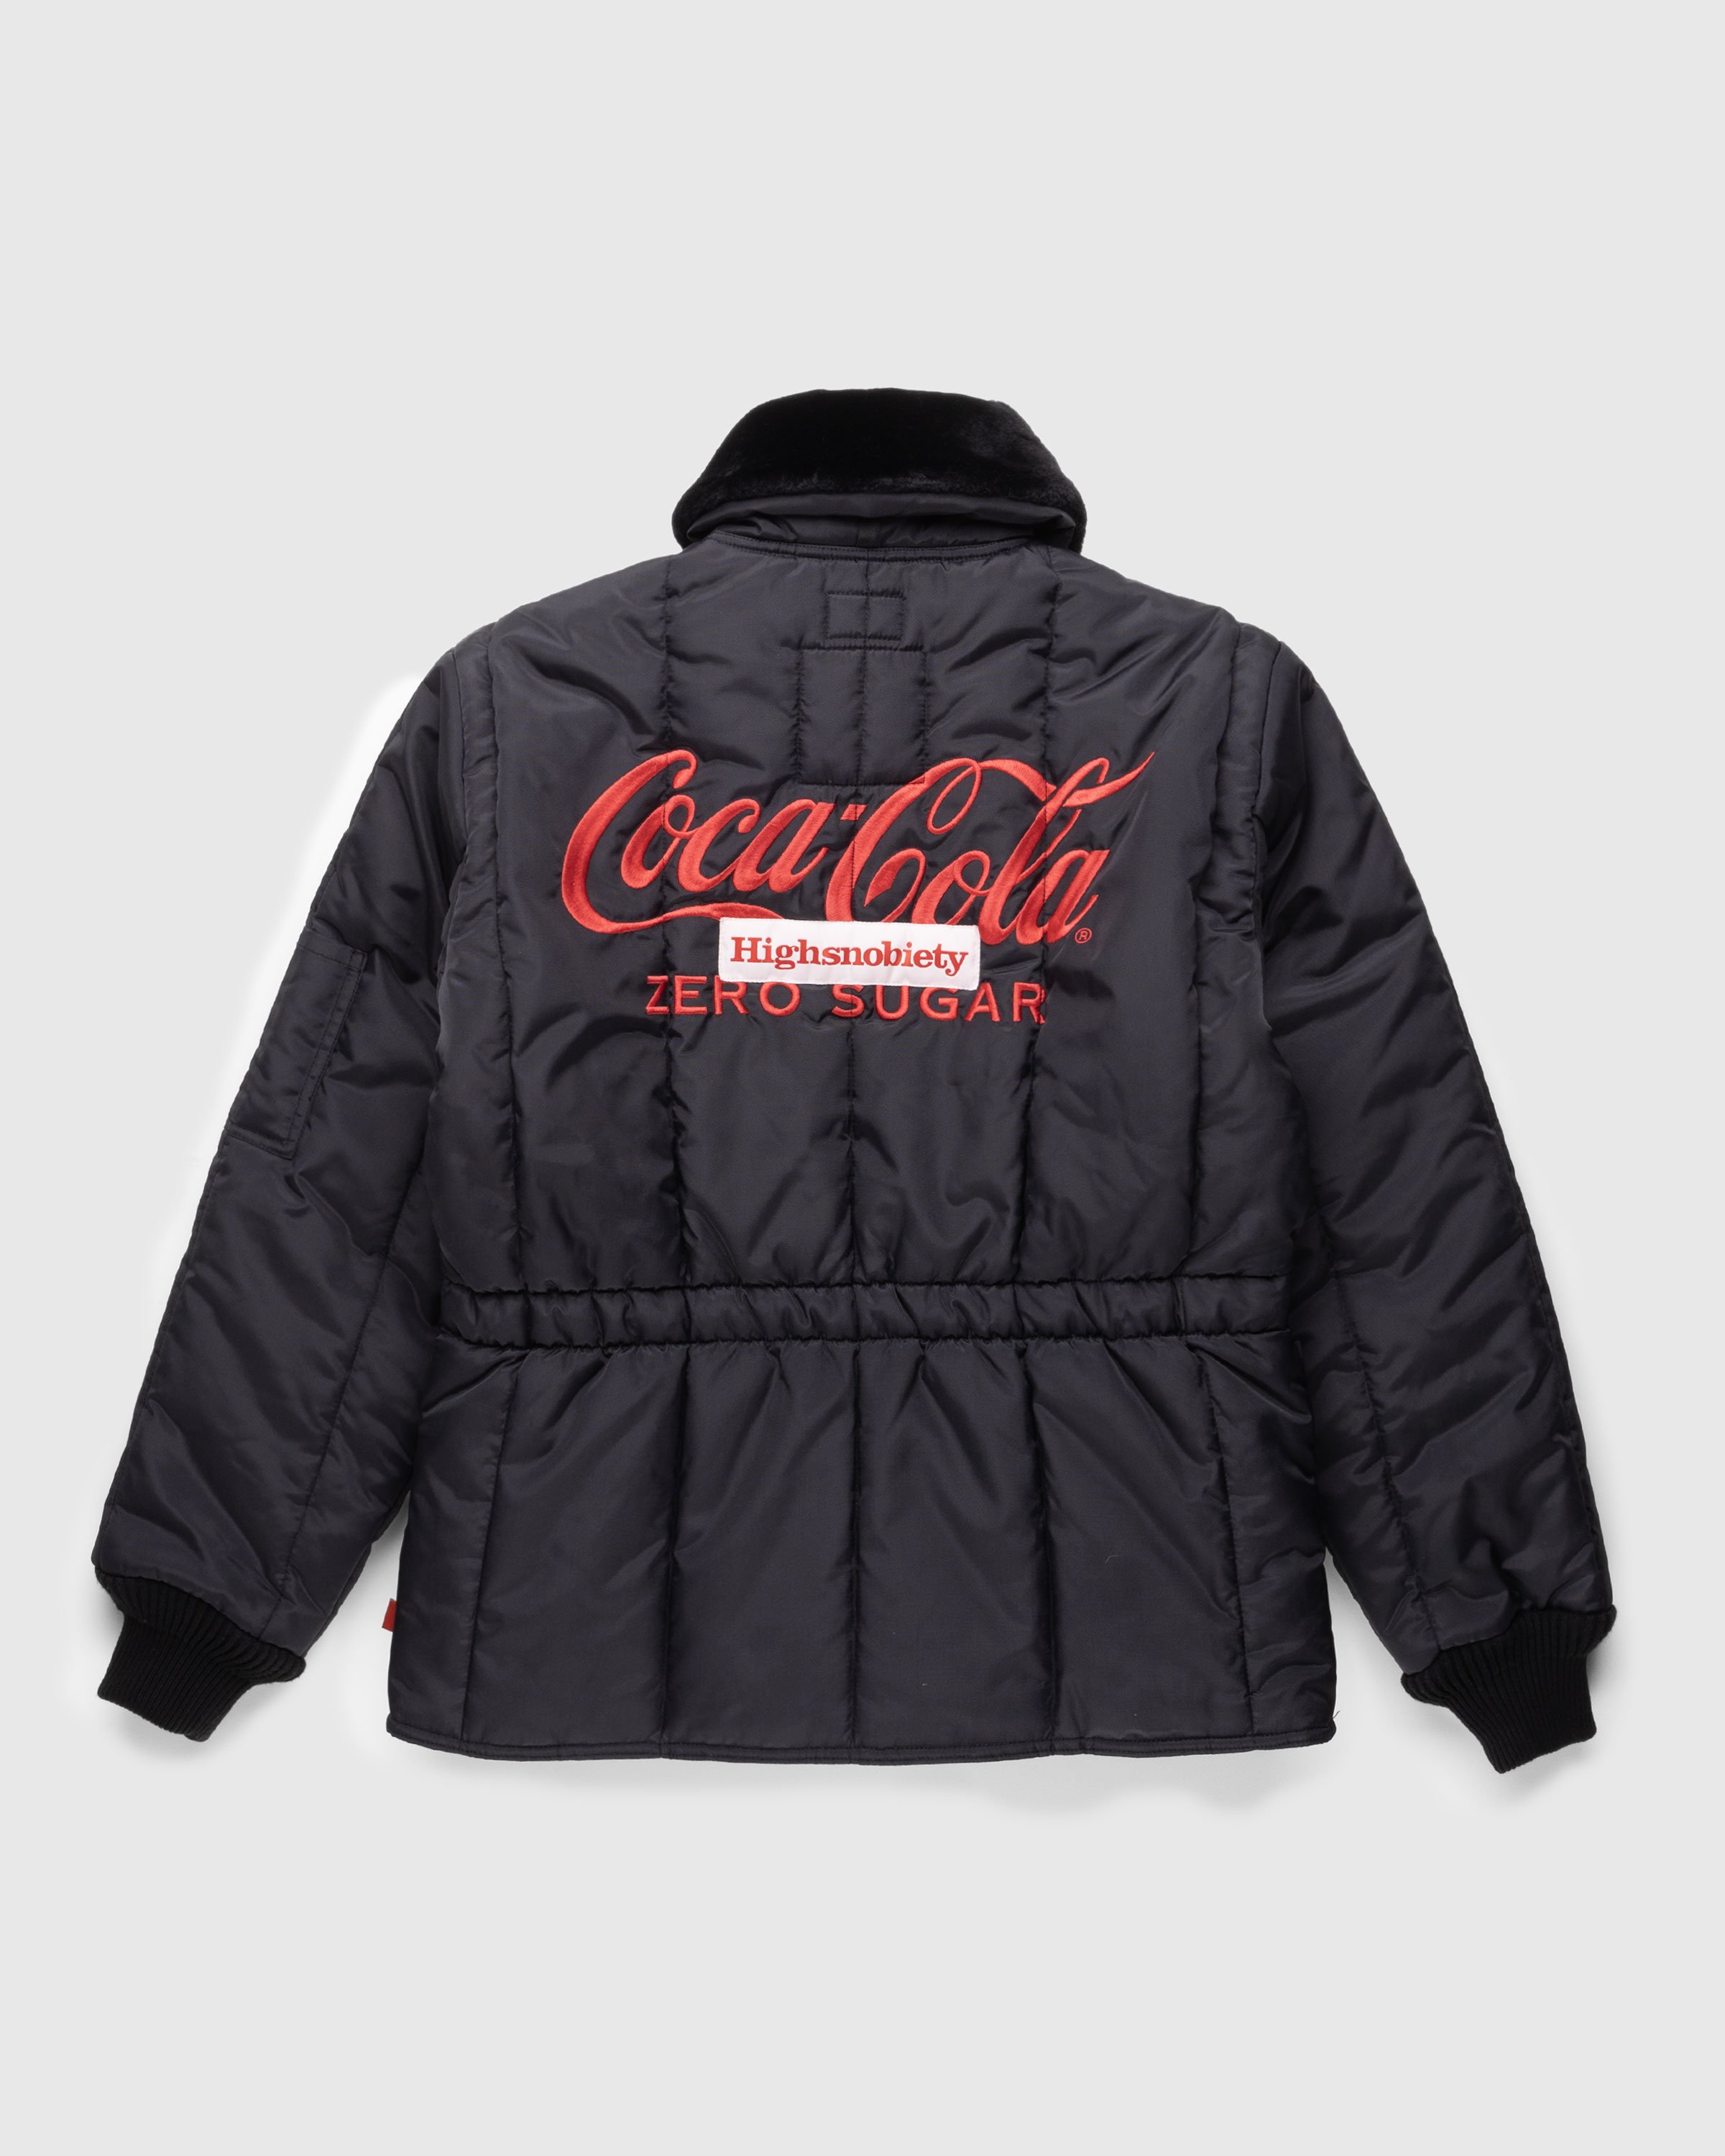 Highsnobiety x Coca-Cola Zero Sugar - RefrigiWear Iron-Tuff® Polar Jacket - Clothing - Black - Image 1